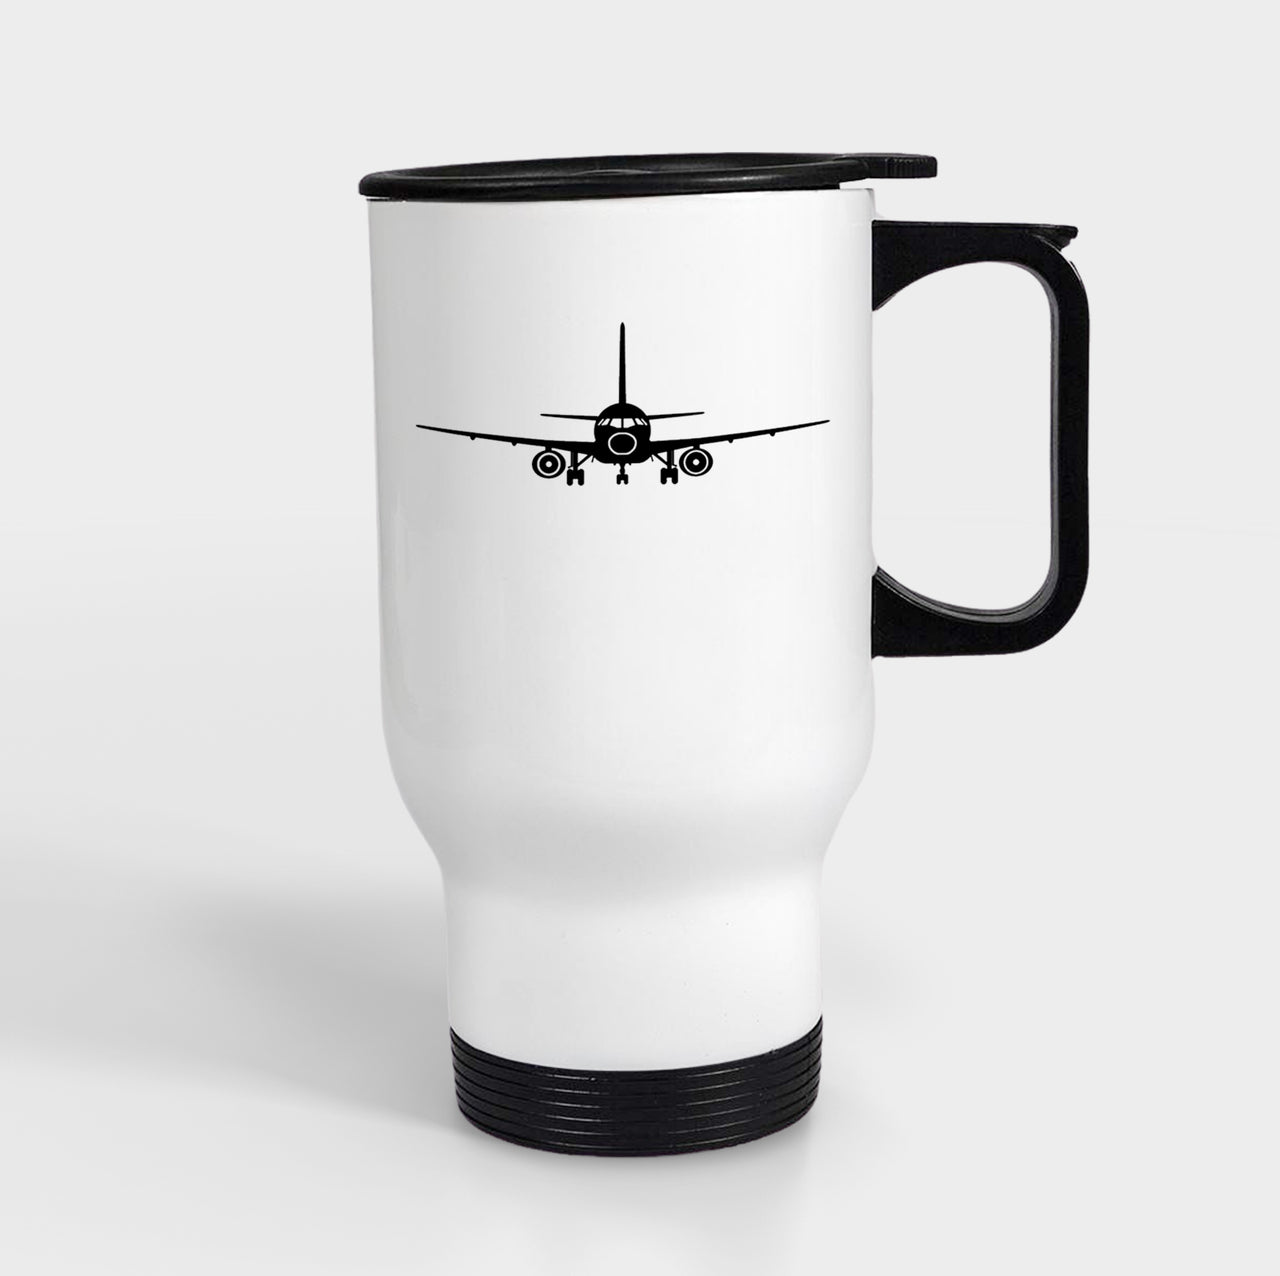 Sukhoi Superjet 100 Silhouette Designed Travel Mugs (With Holder)